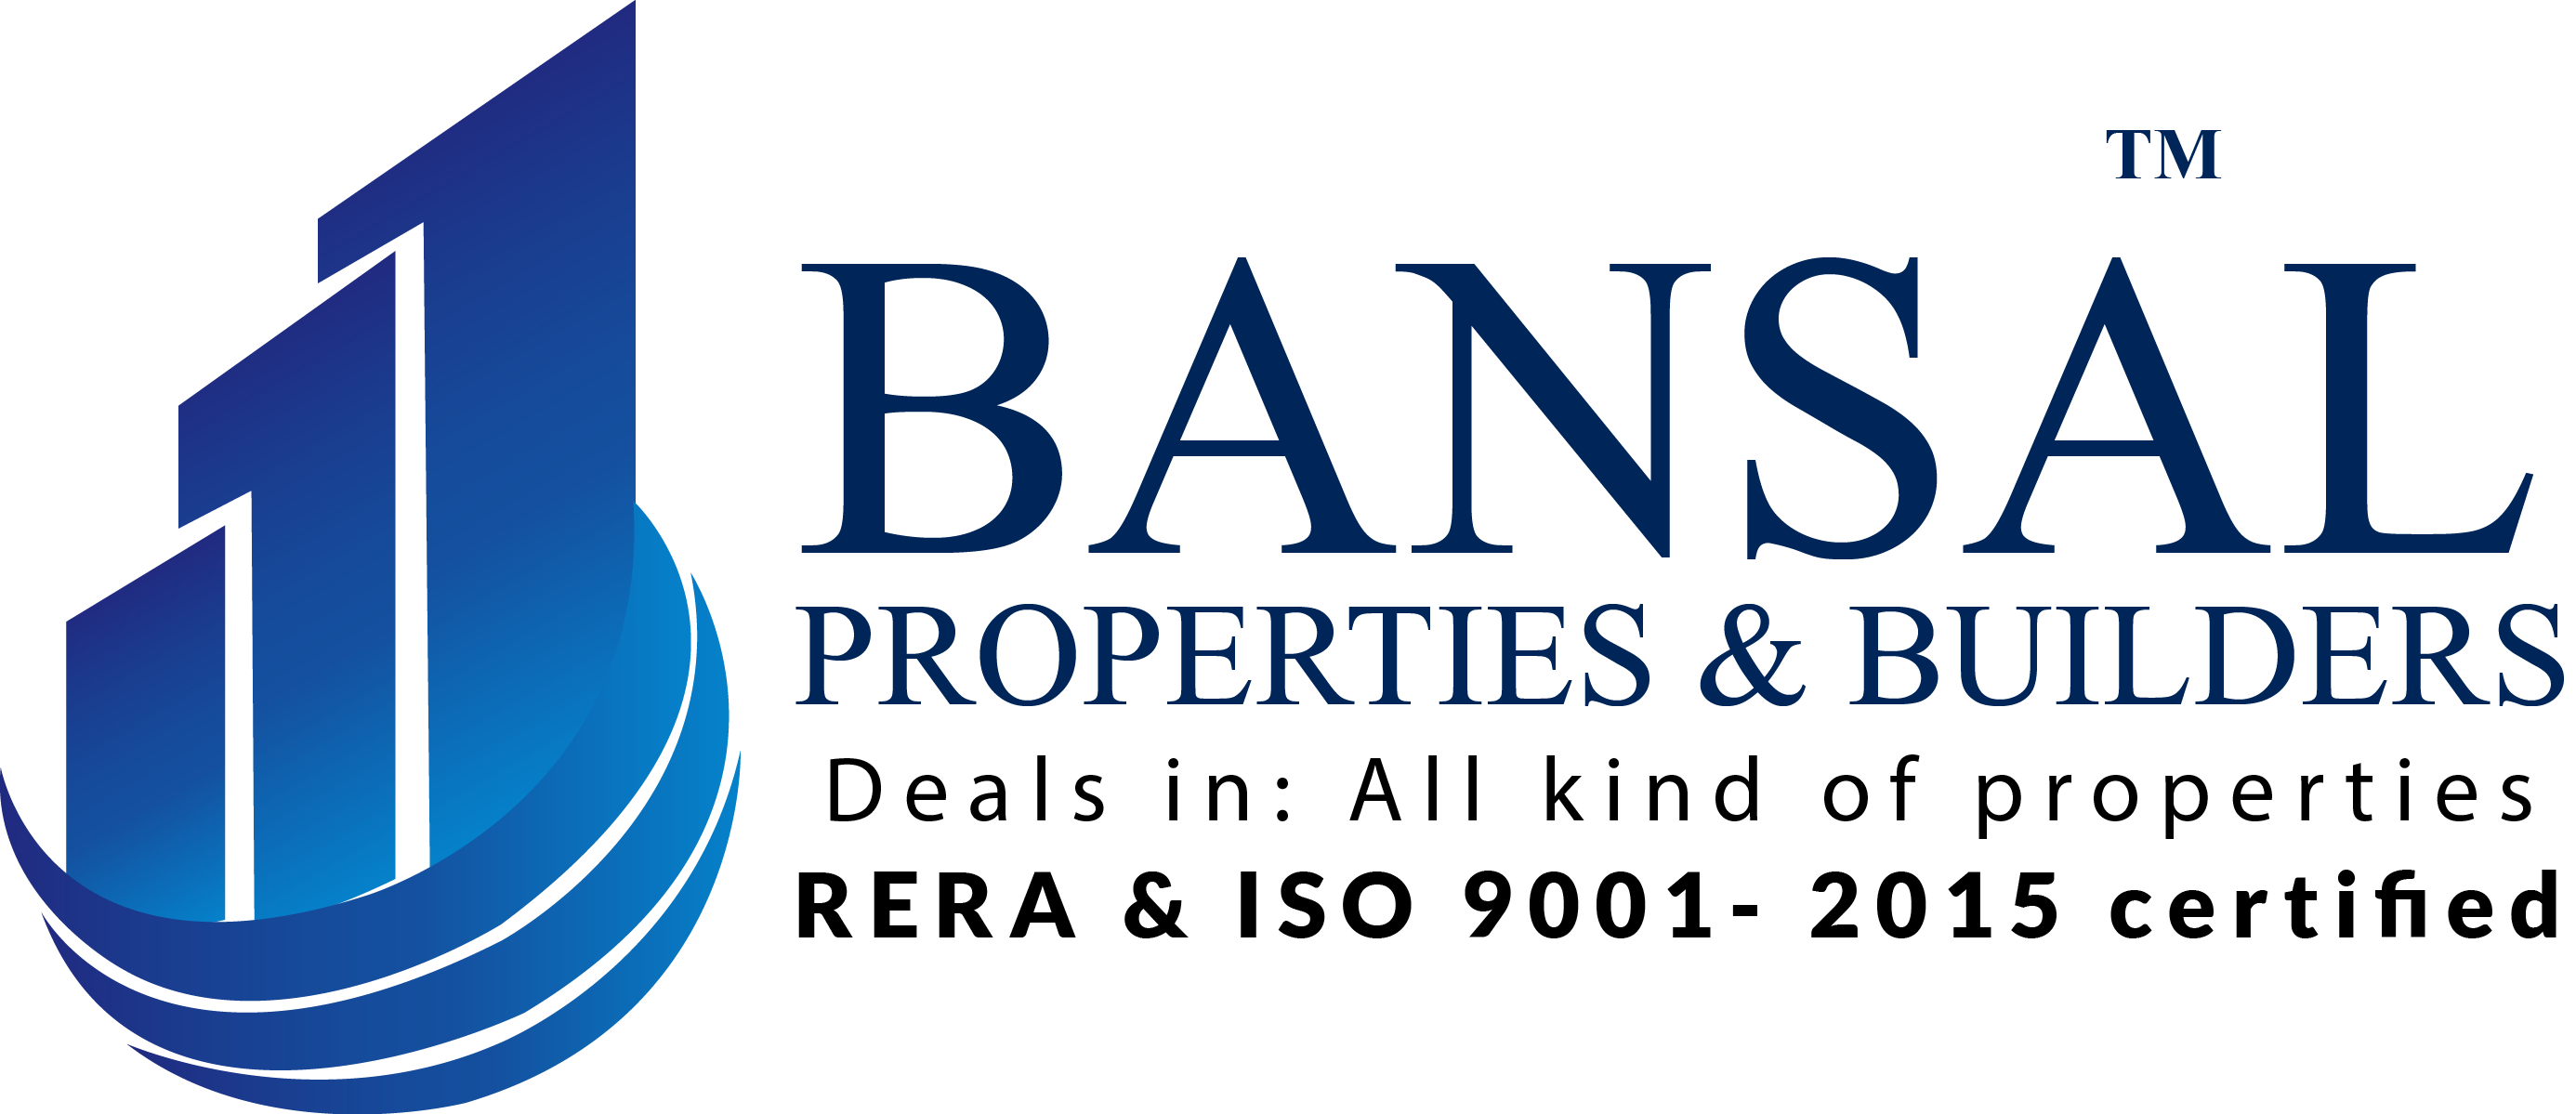 Bansal Travels Company Profile, information, investors, valuation & Funding